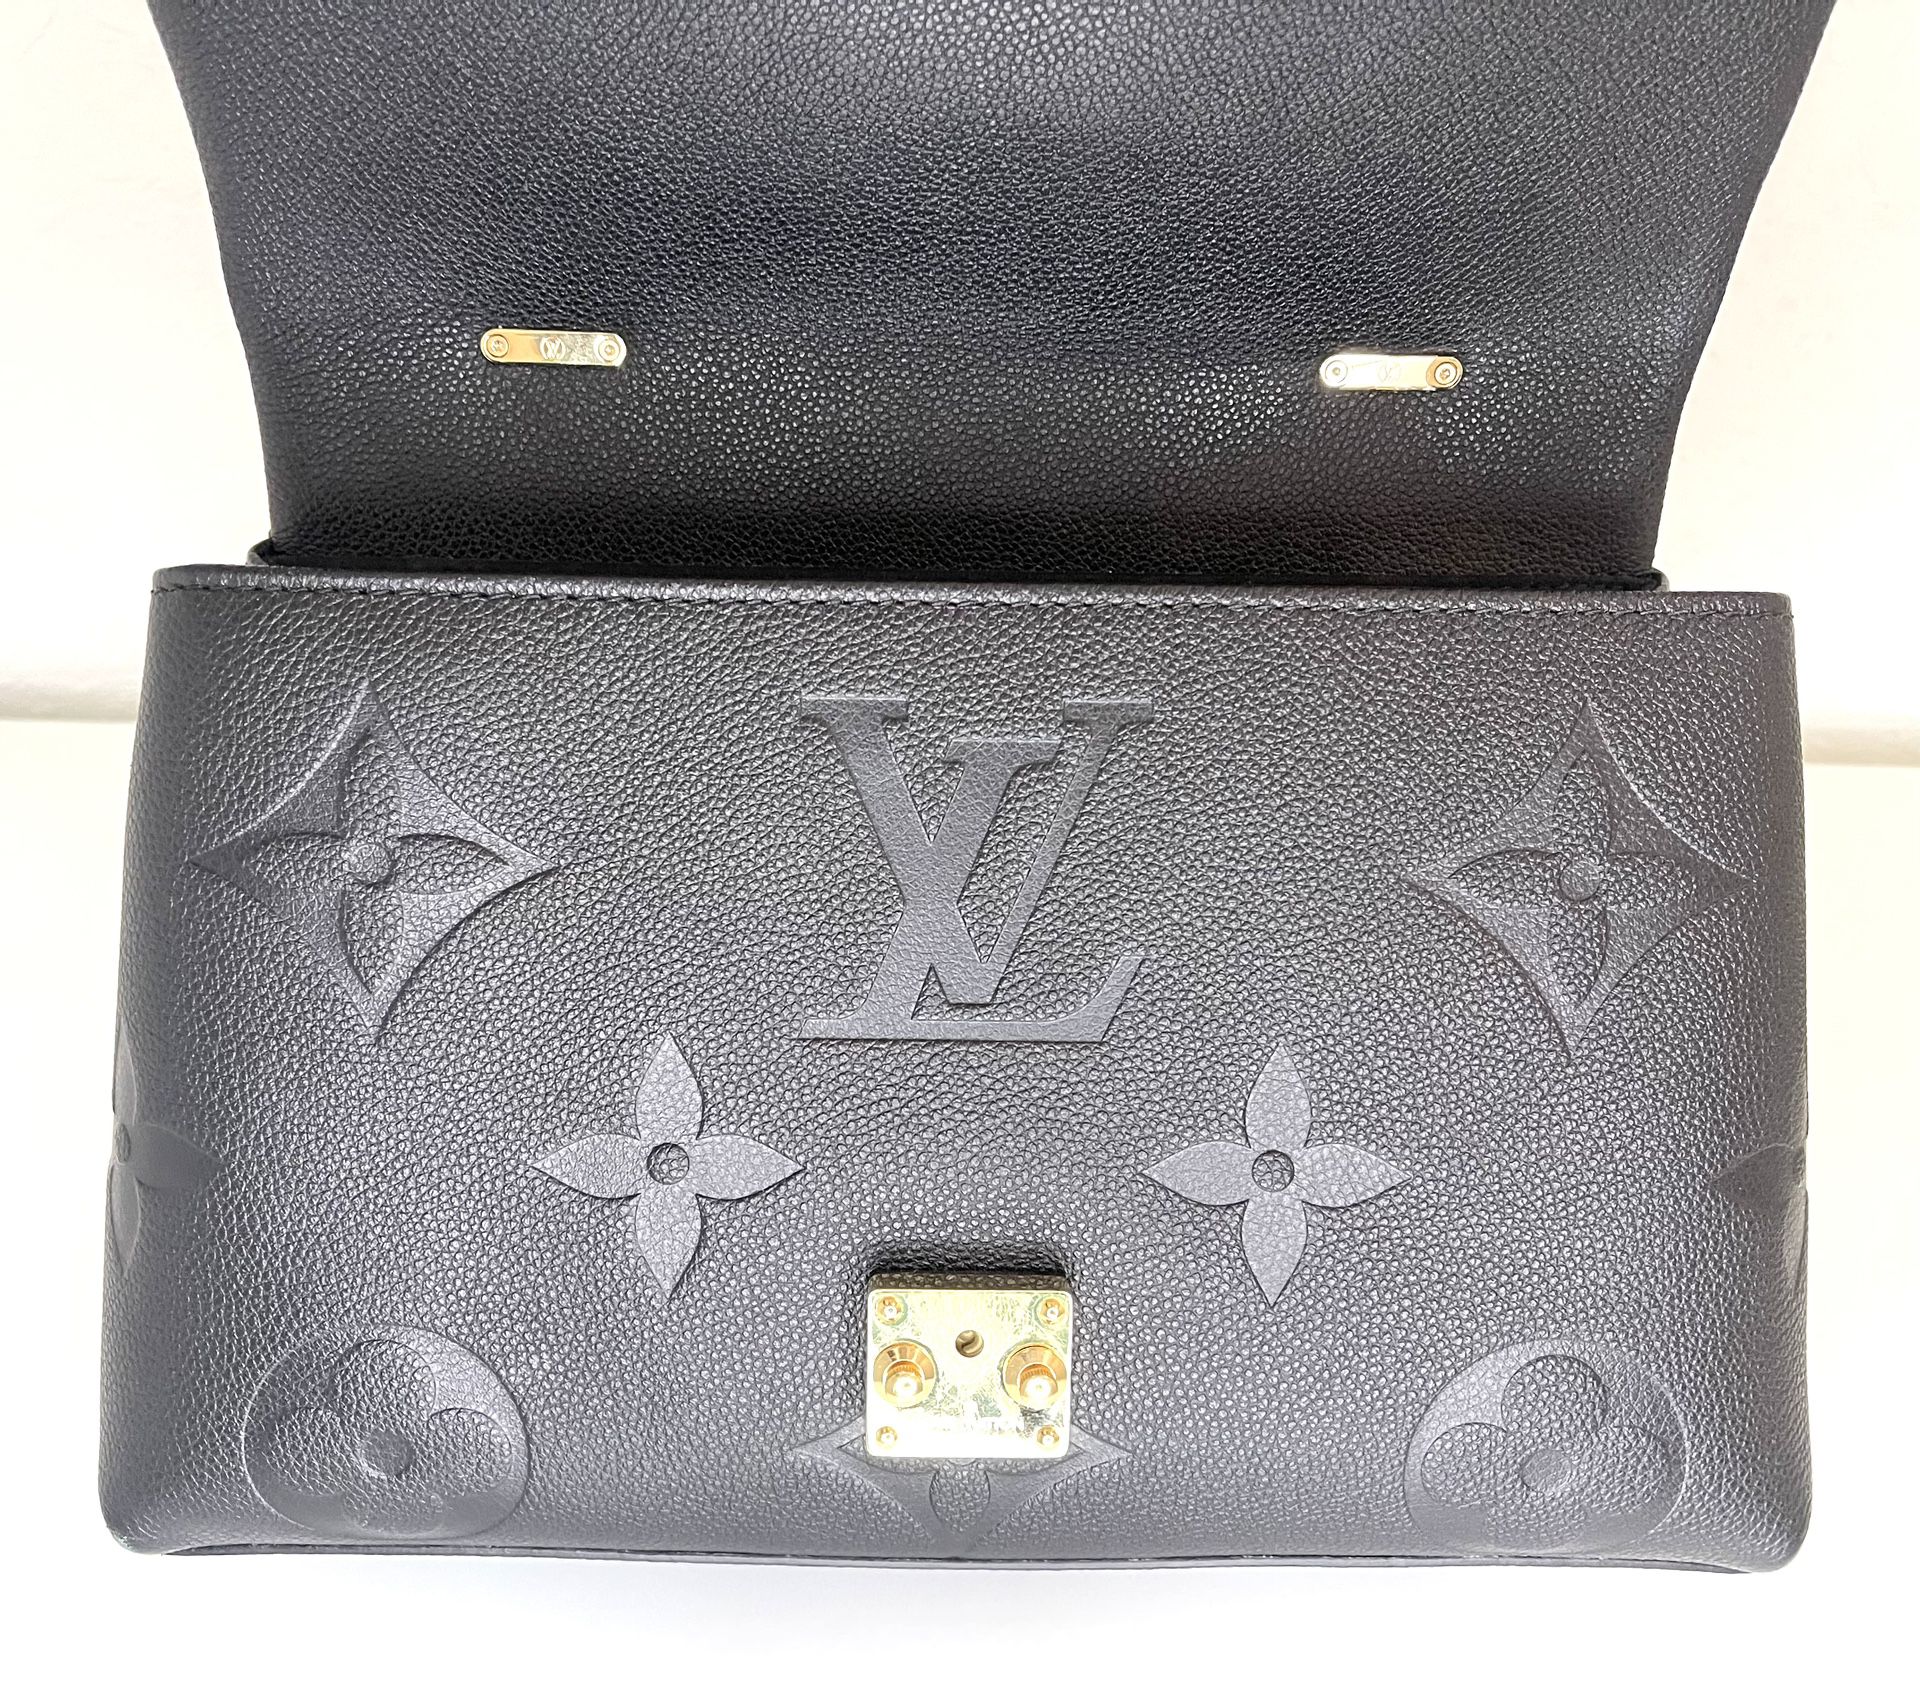 Louis Vuitton Madeleine MM Bag for Sale in Boerne, TX - OfferUp